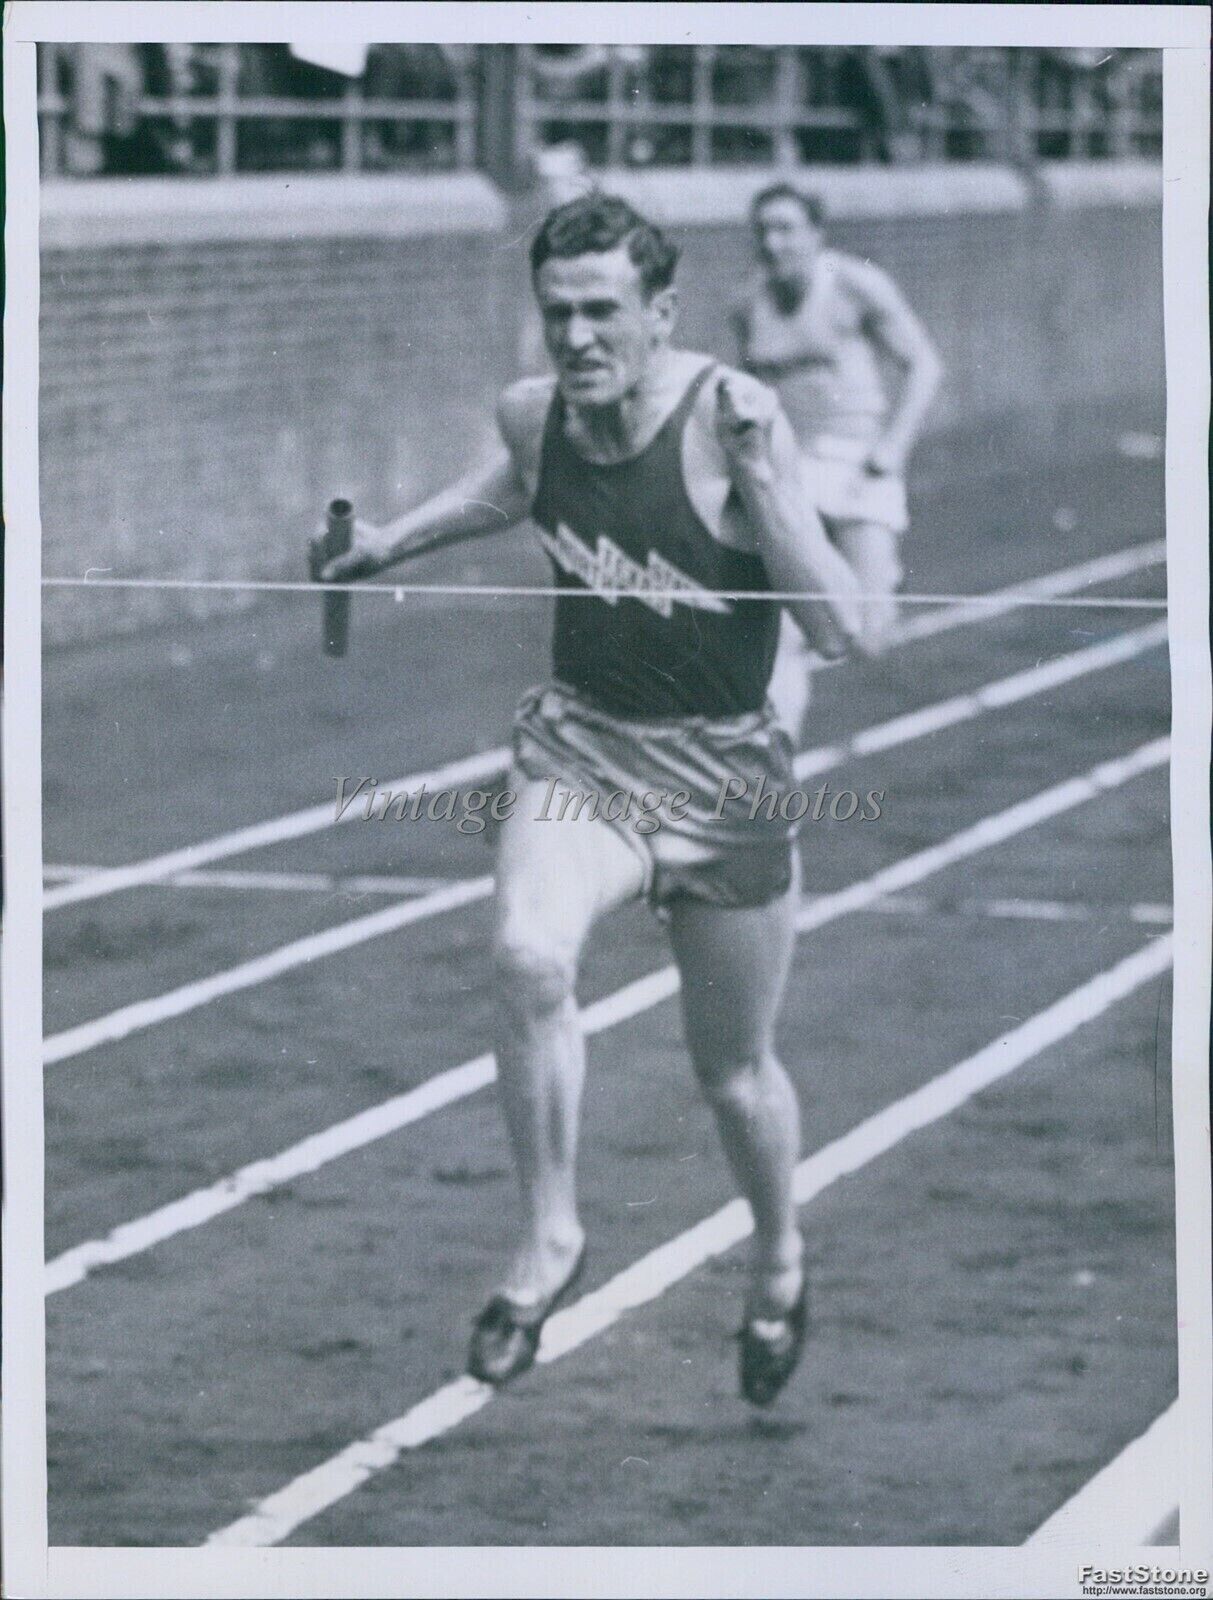 1940 Rogers Of N Texas Teachers Bests Colgate At Penn Relays Sports Photo 6X8